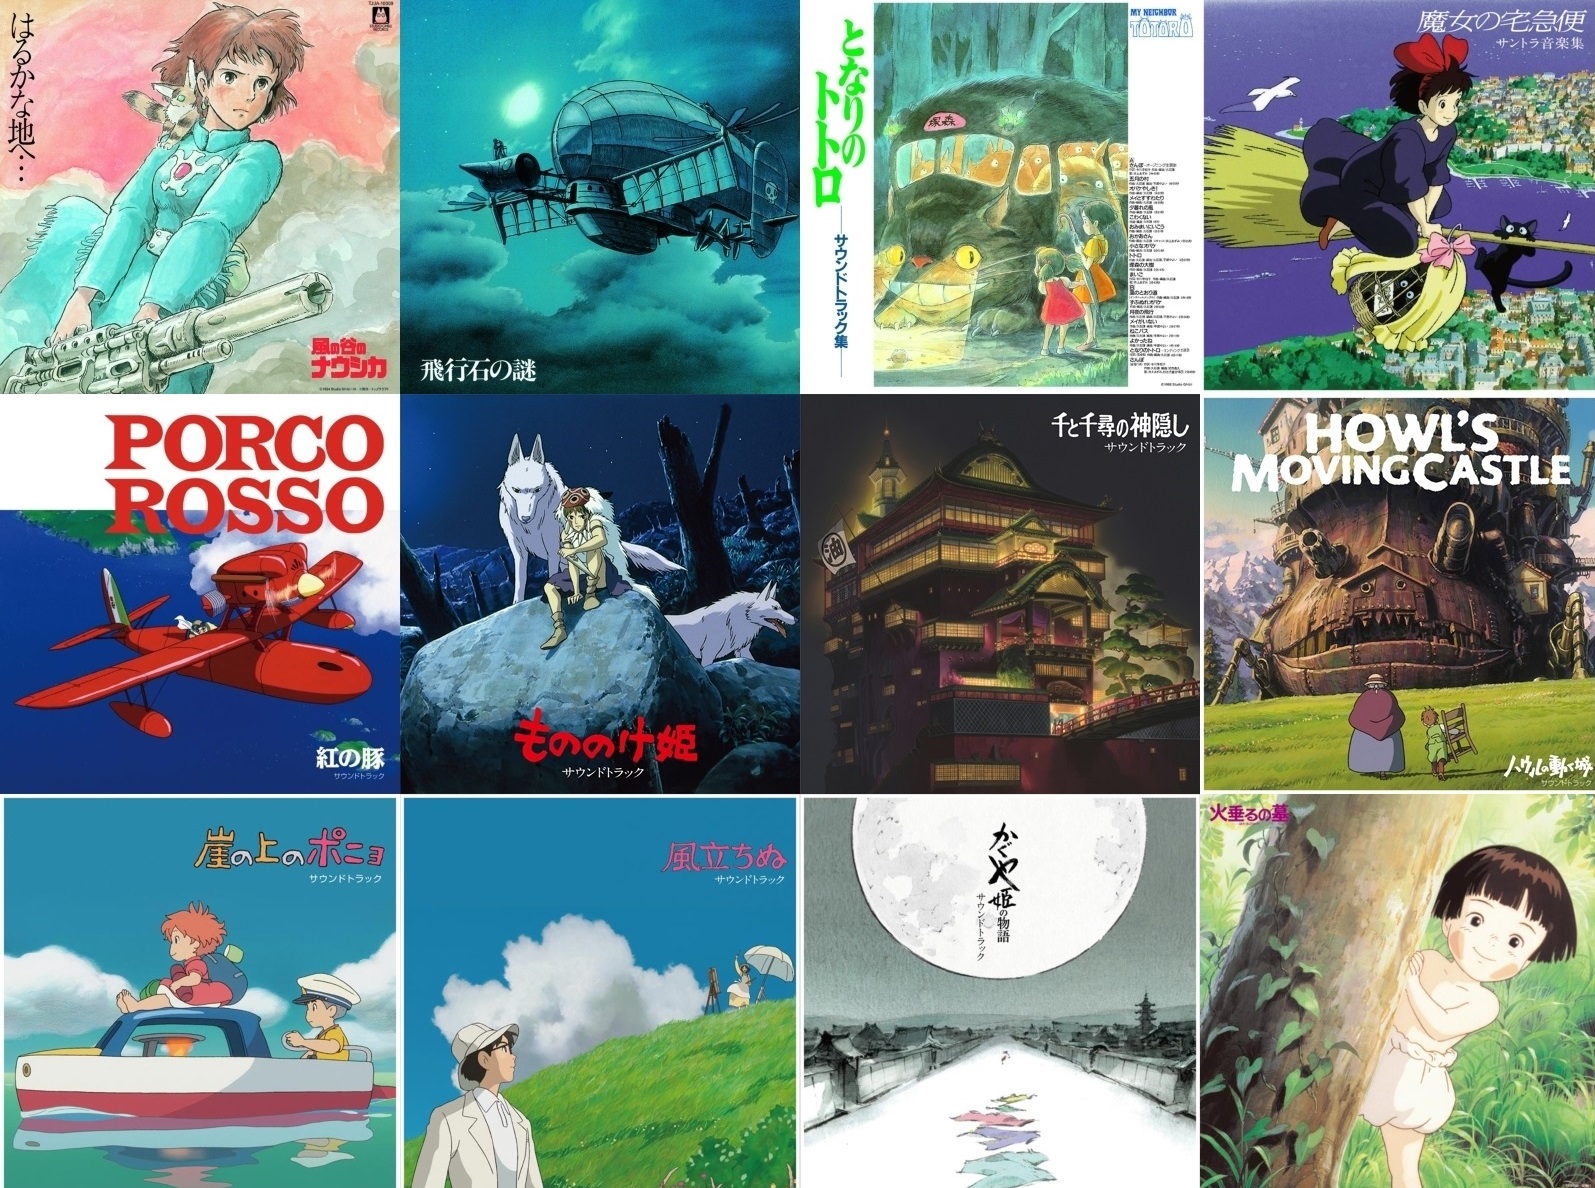 Hayao Miyazaki and the rich fantastical world of Studio Ghibli